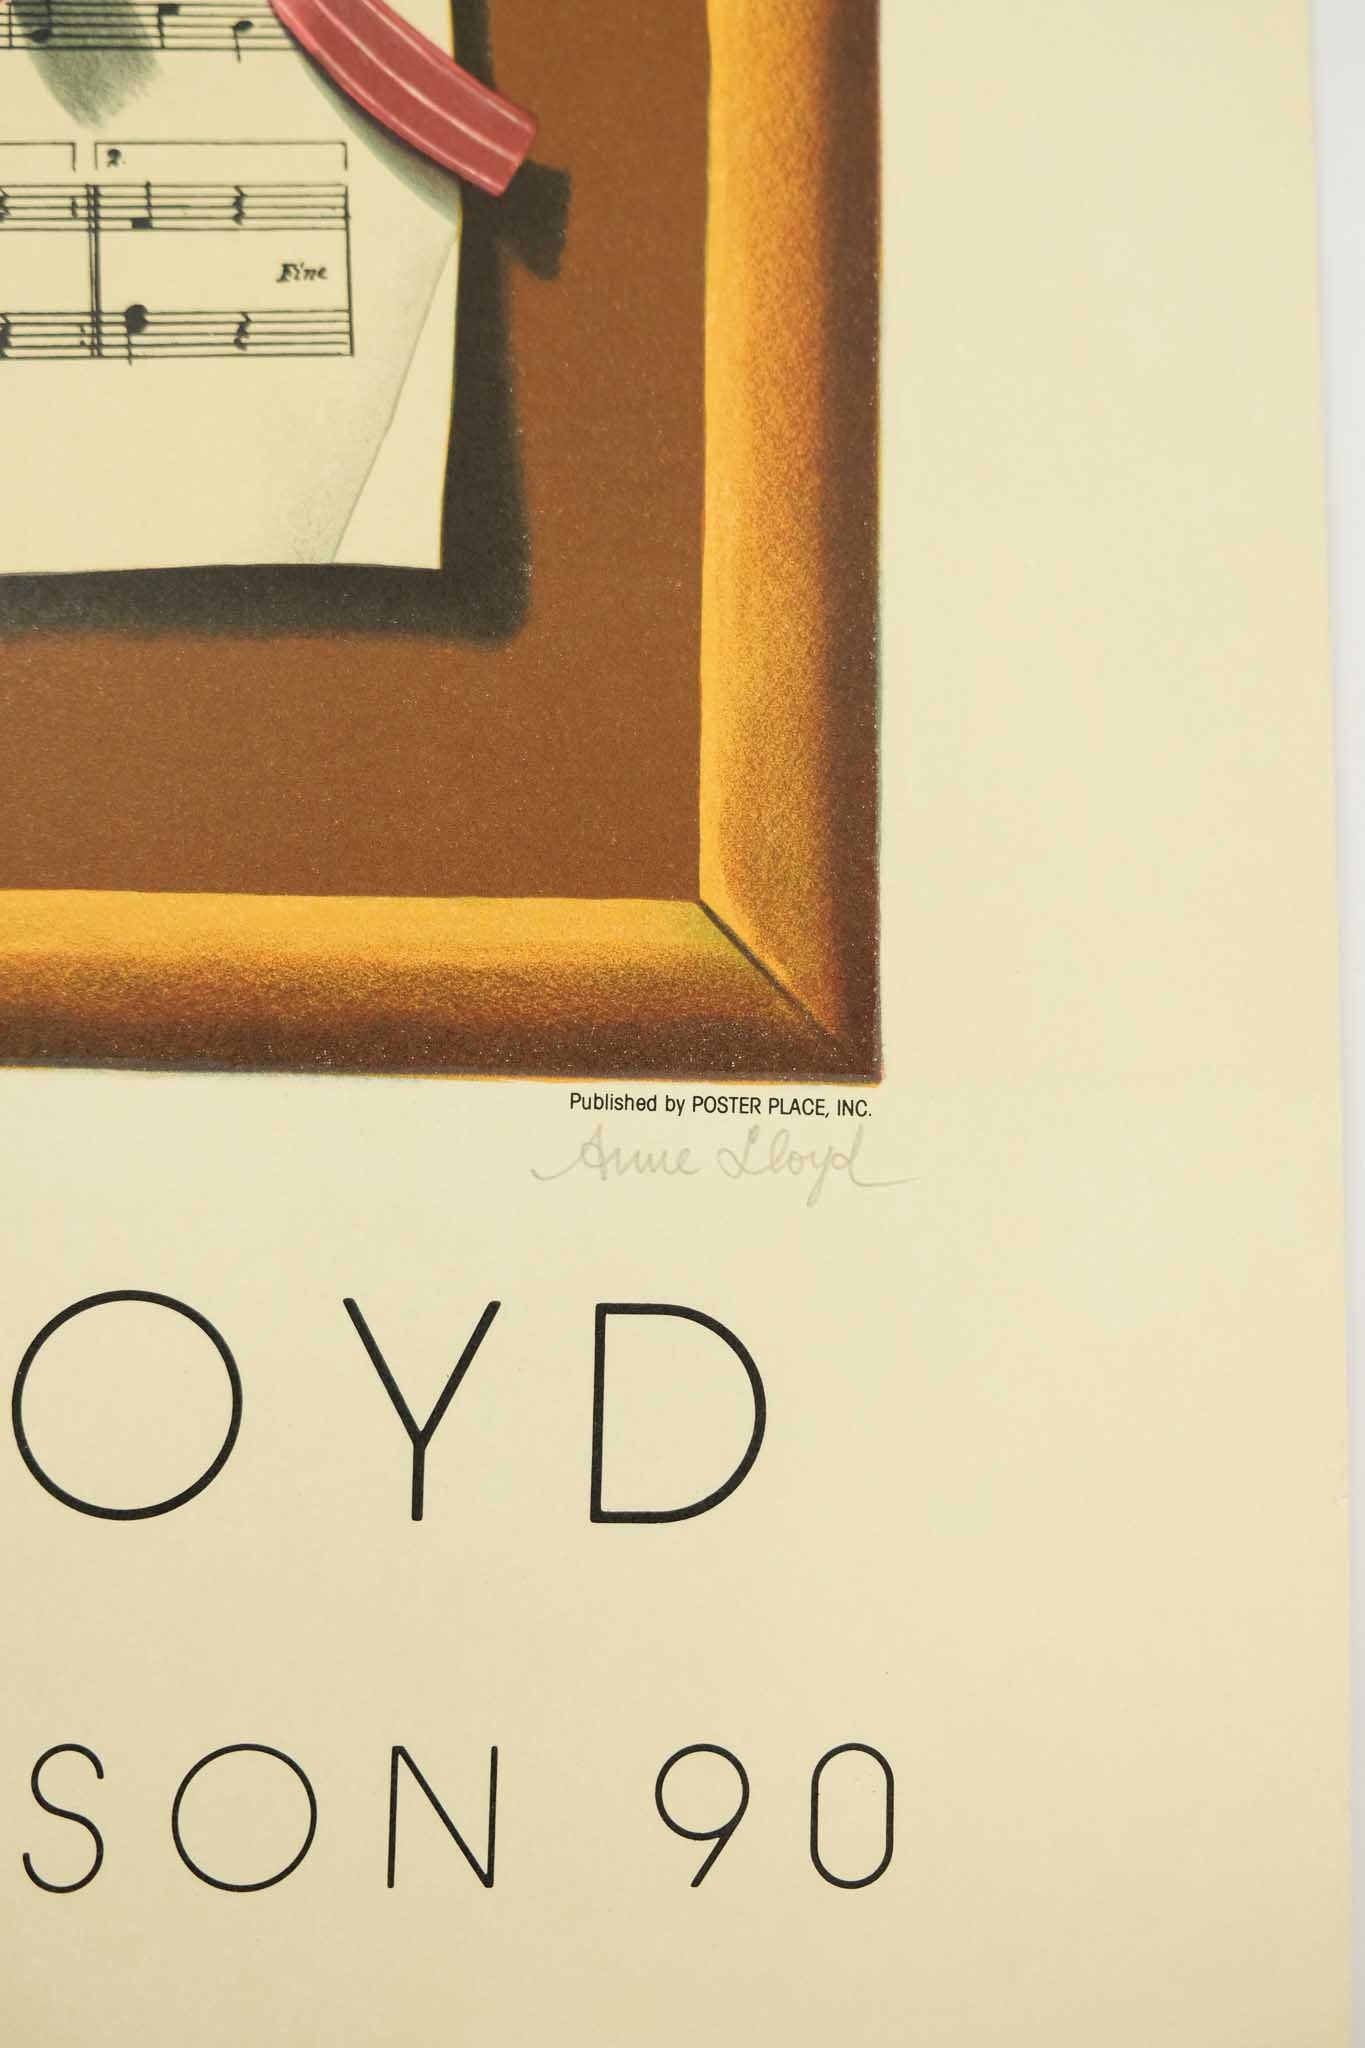 Anne Lloyd Hand Signed Gallery Madison 1990 Print